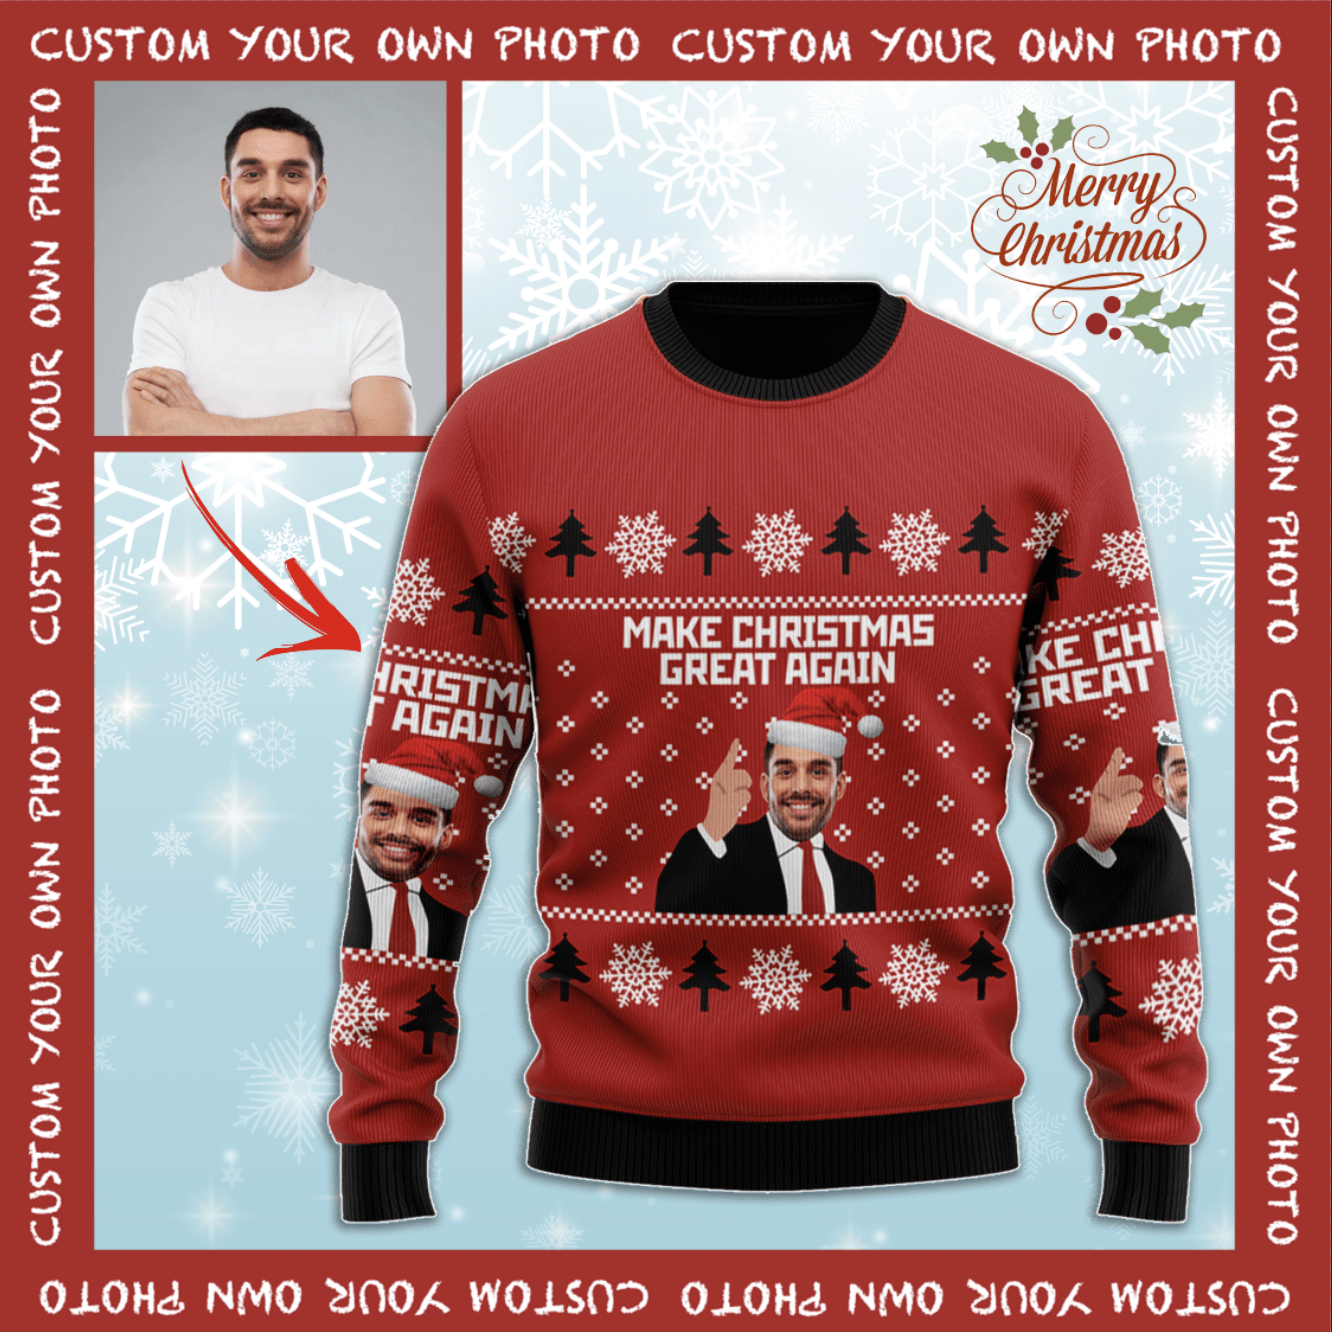 Personalized Make Christmas Great Again Custom Photo Unisex Sweater PAN